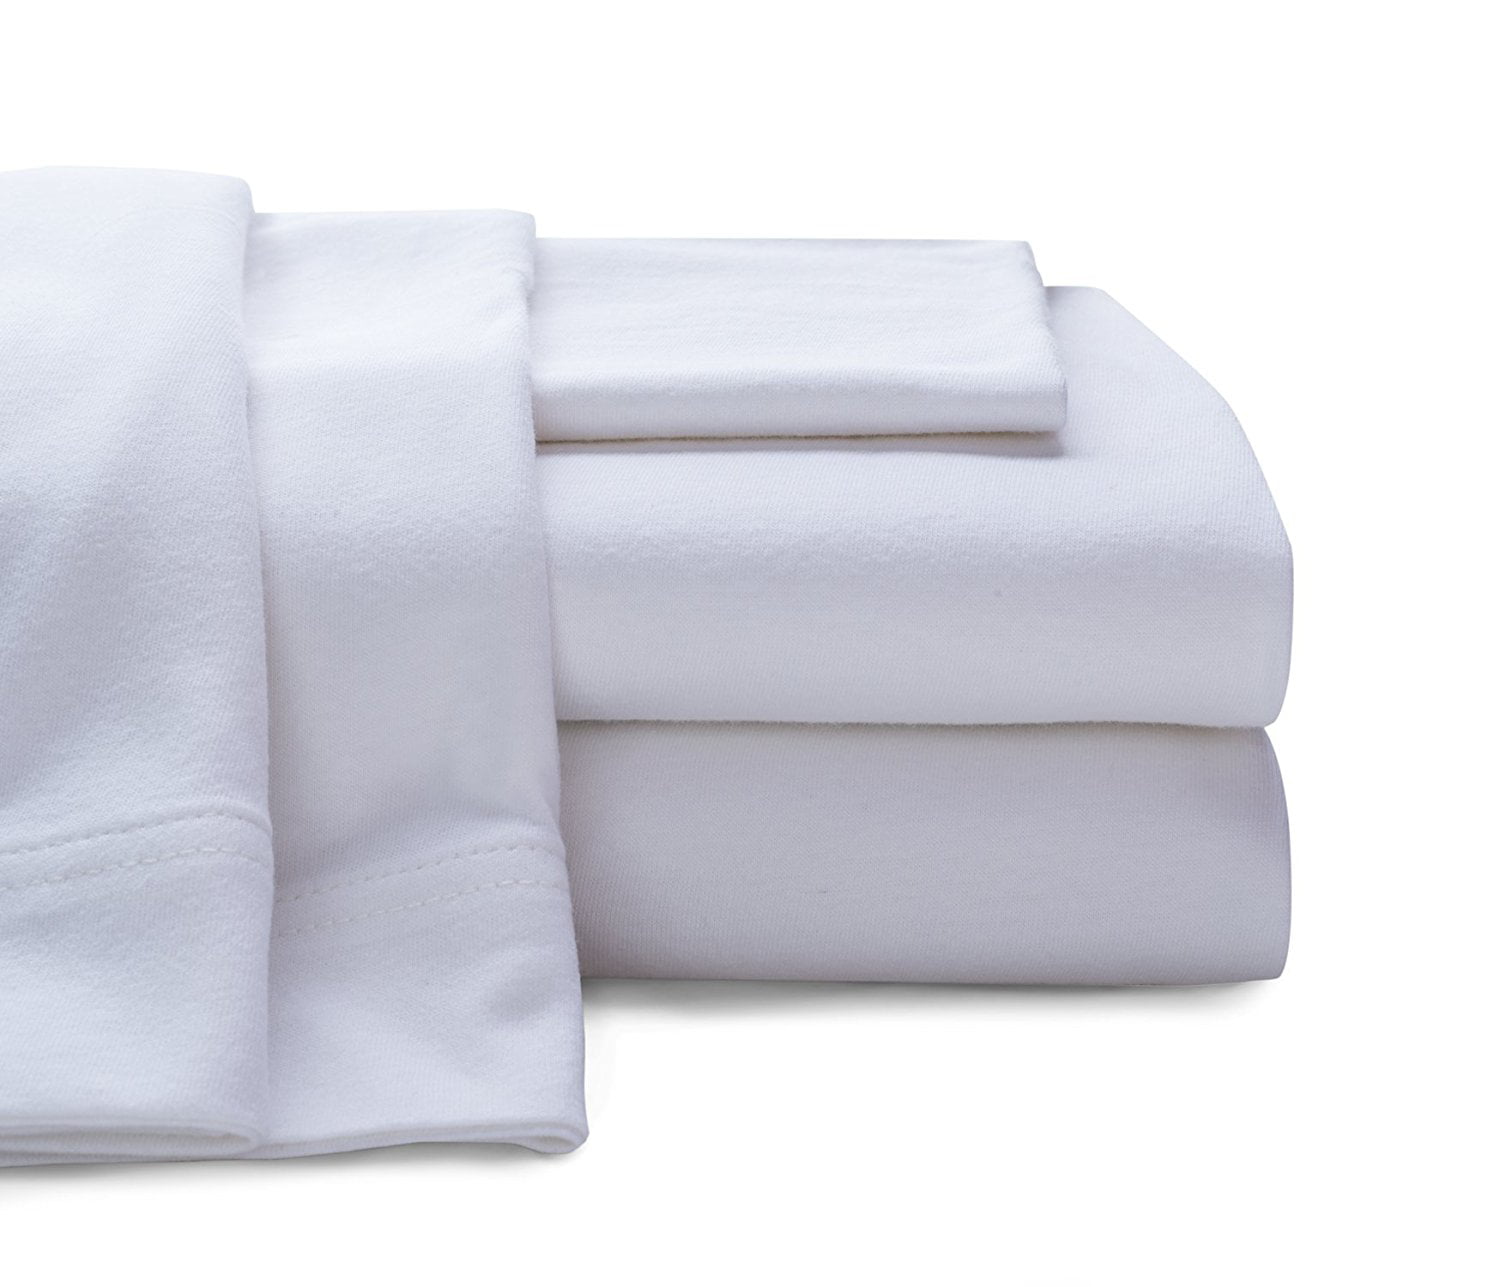 Baltic Linen Company Cotton Jersey Sheet Set Queen White for sale online 